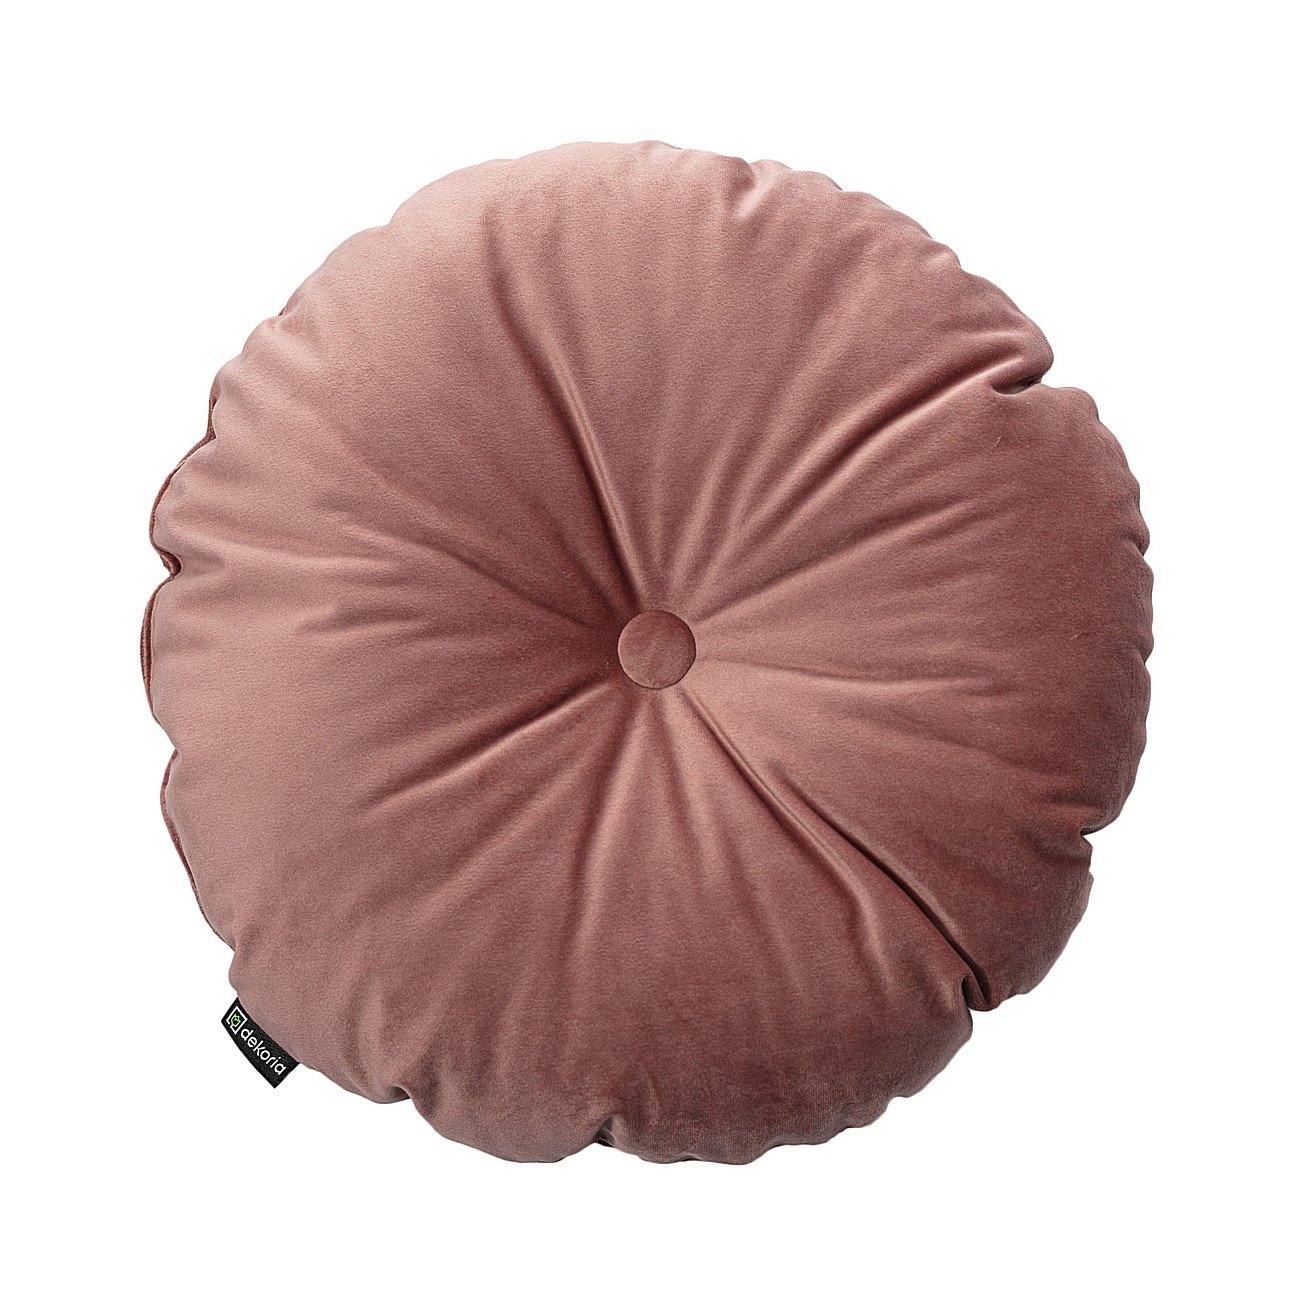 Dekoria Sametový polštář s knoflíkem, korálová růžová, ⌀37 cm, Velvet, 704-30